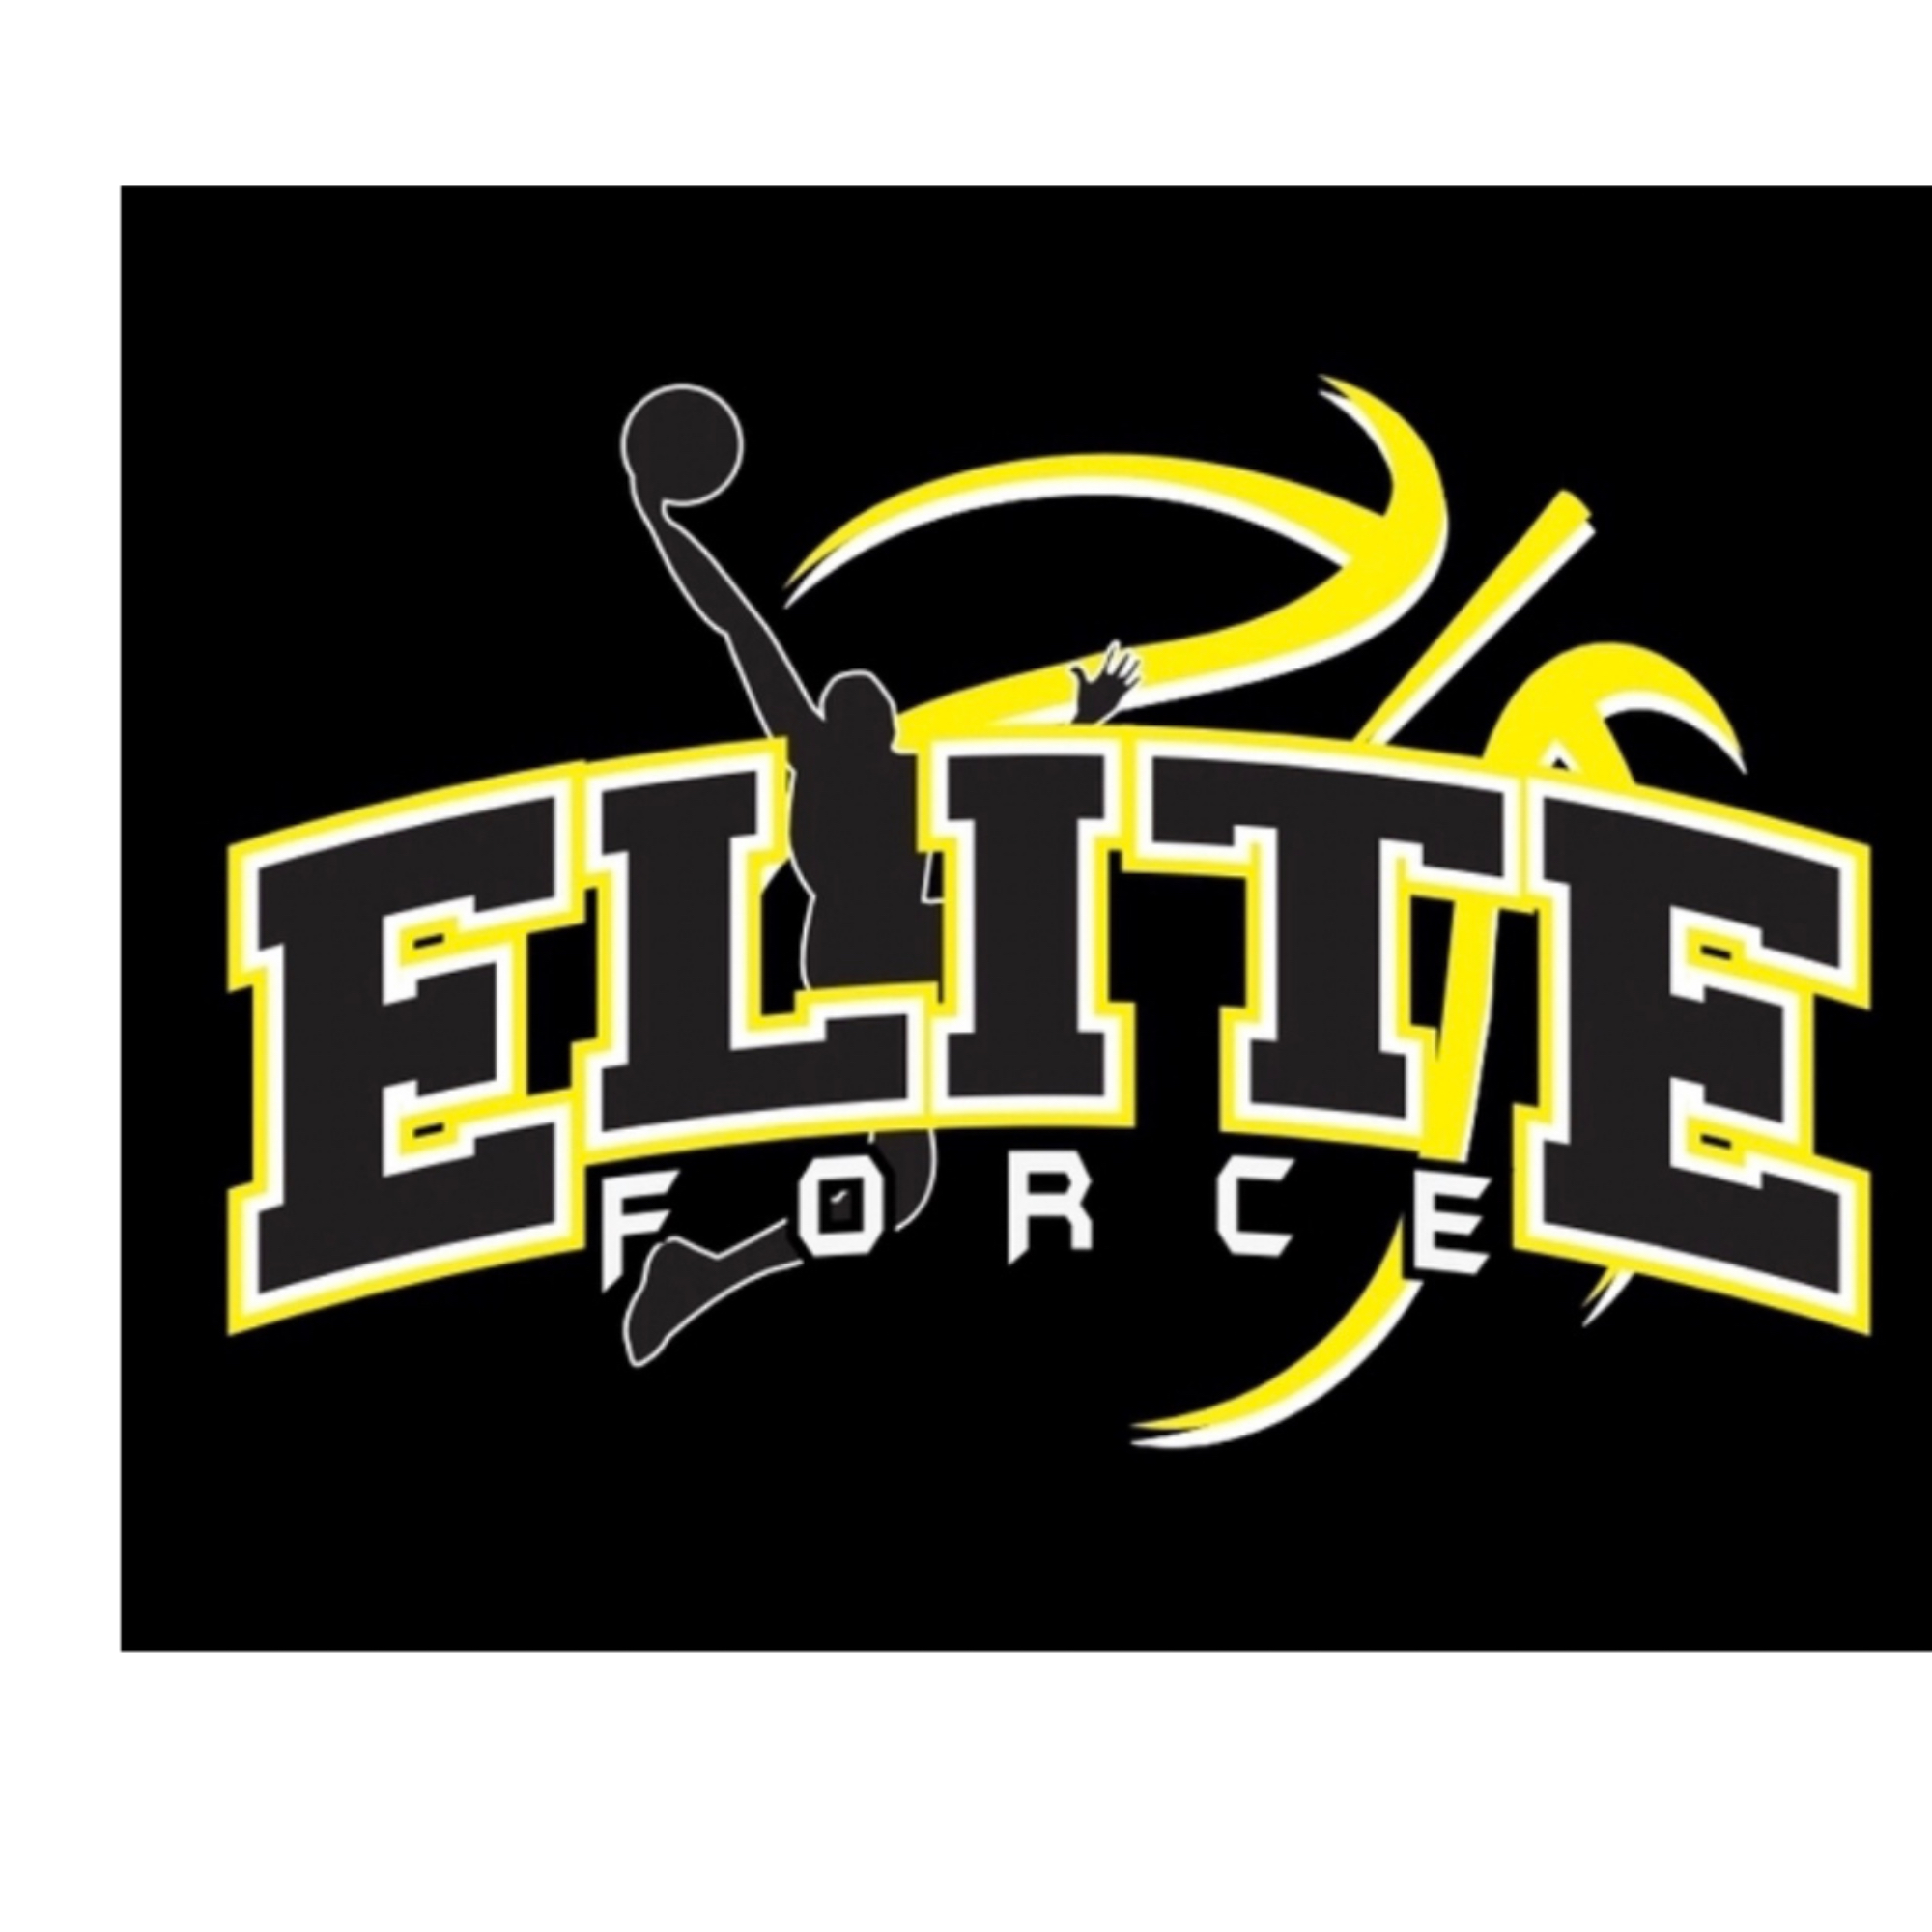 Organization logo for Elite Force